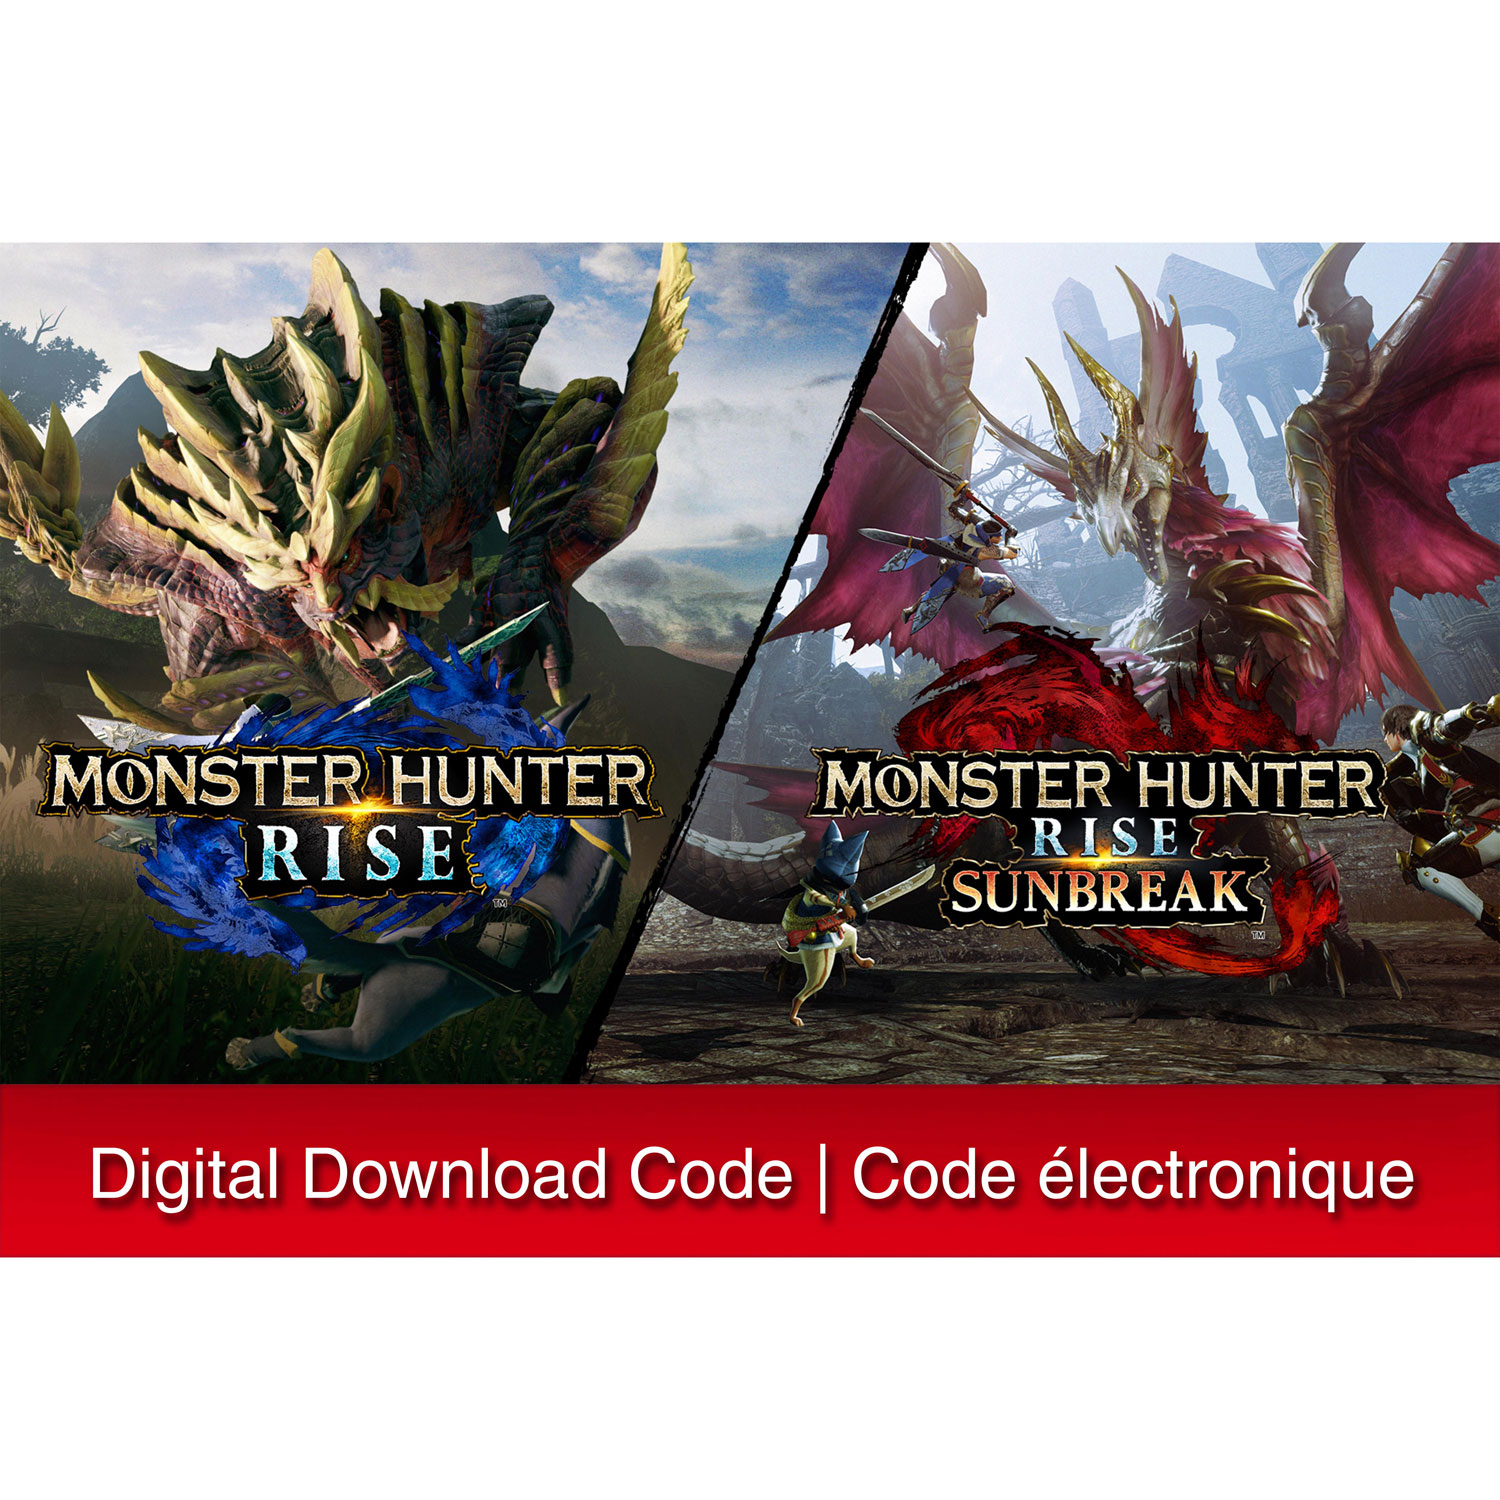 Monster Hunter Rise + Sunbreak (Switch) - Digital Download